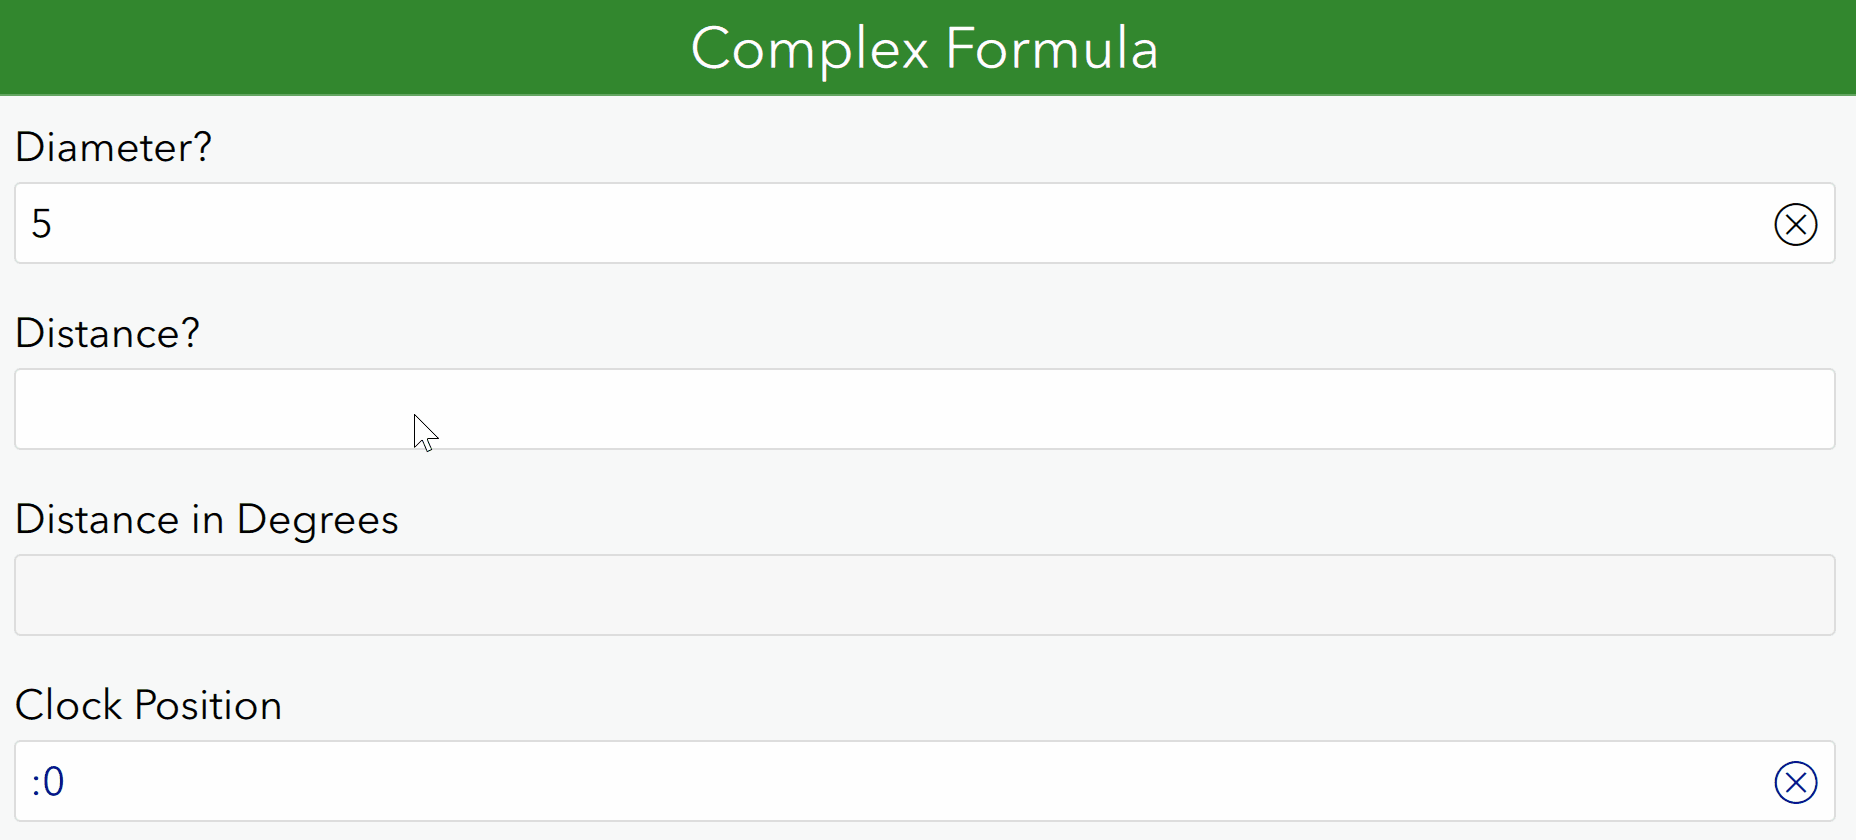 Animation showing the Survey123 complex formula computation